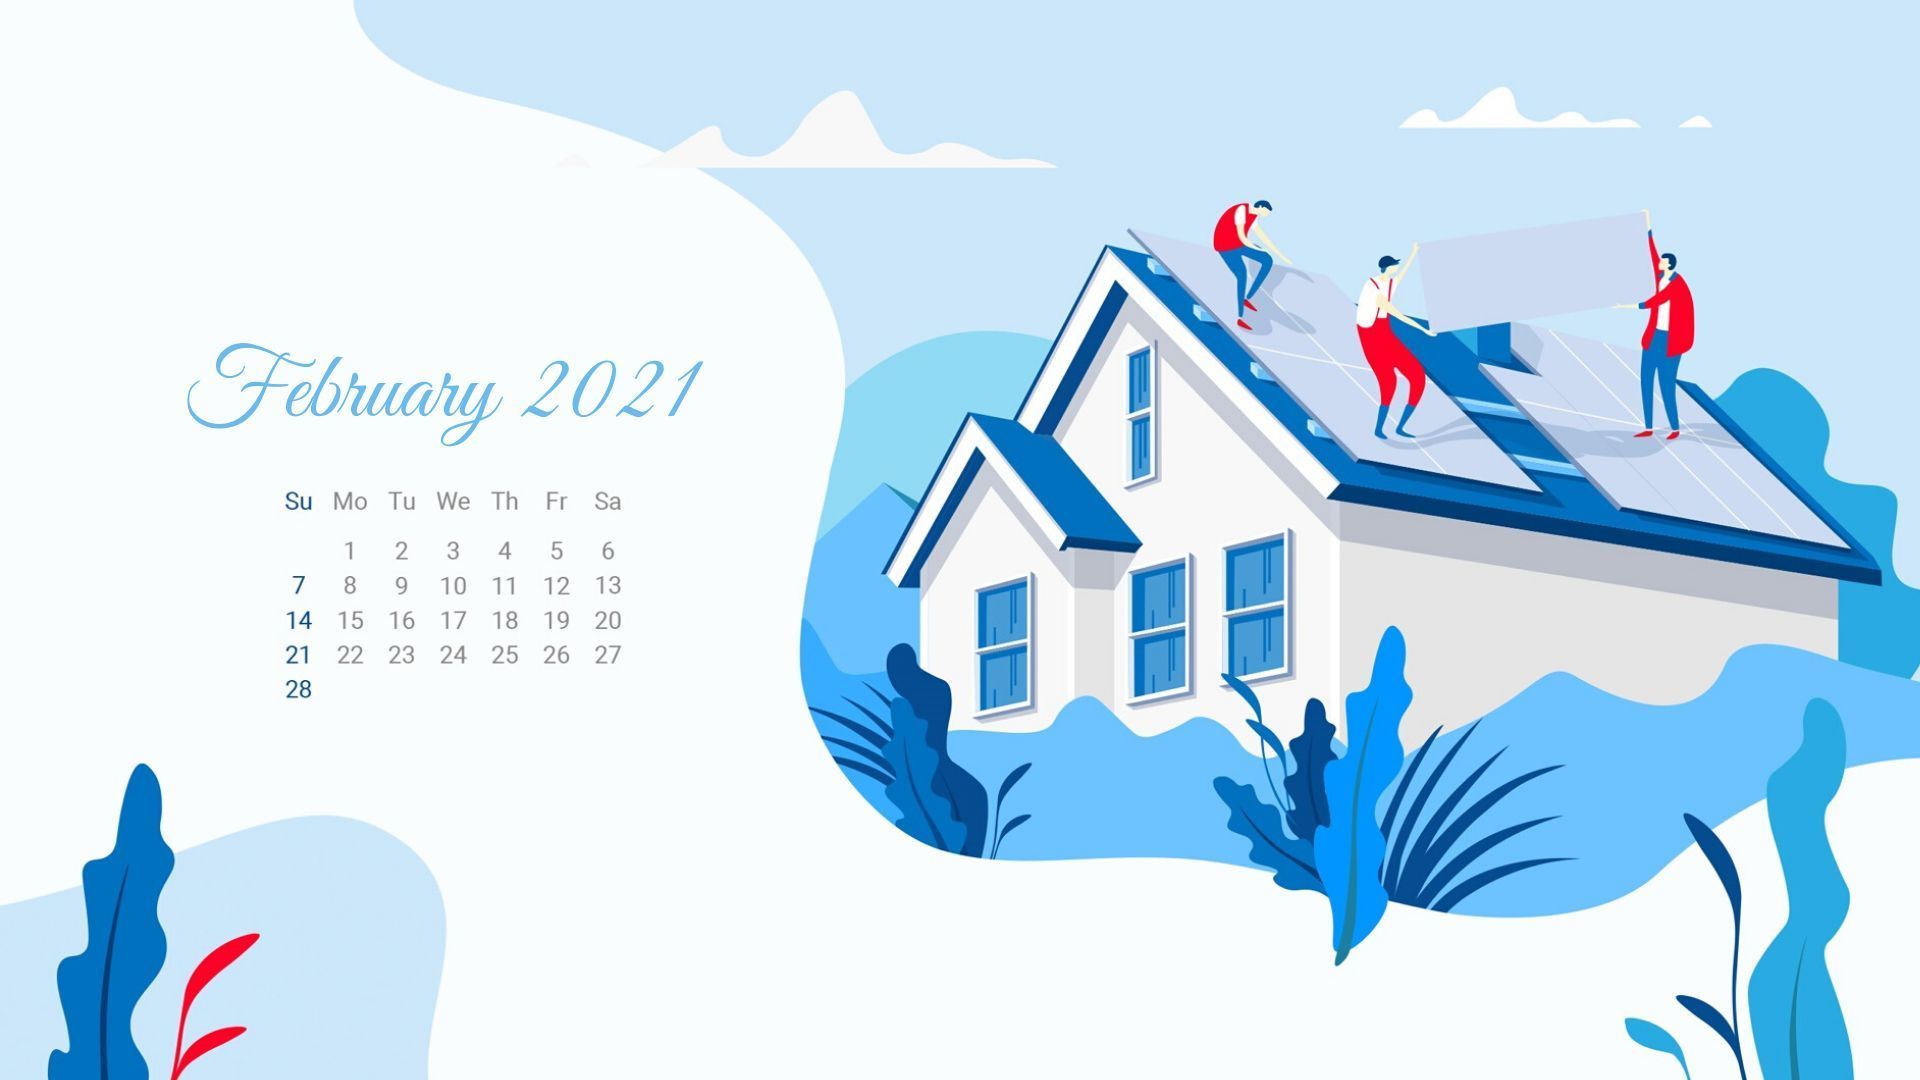 January 2021 Calendar Wallpaper Hd Image ID 5